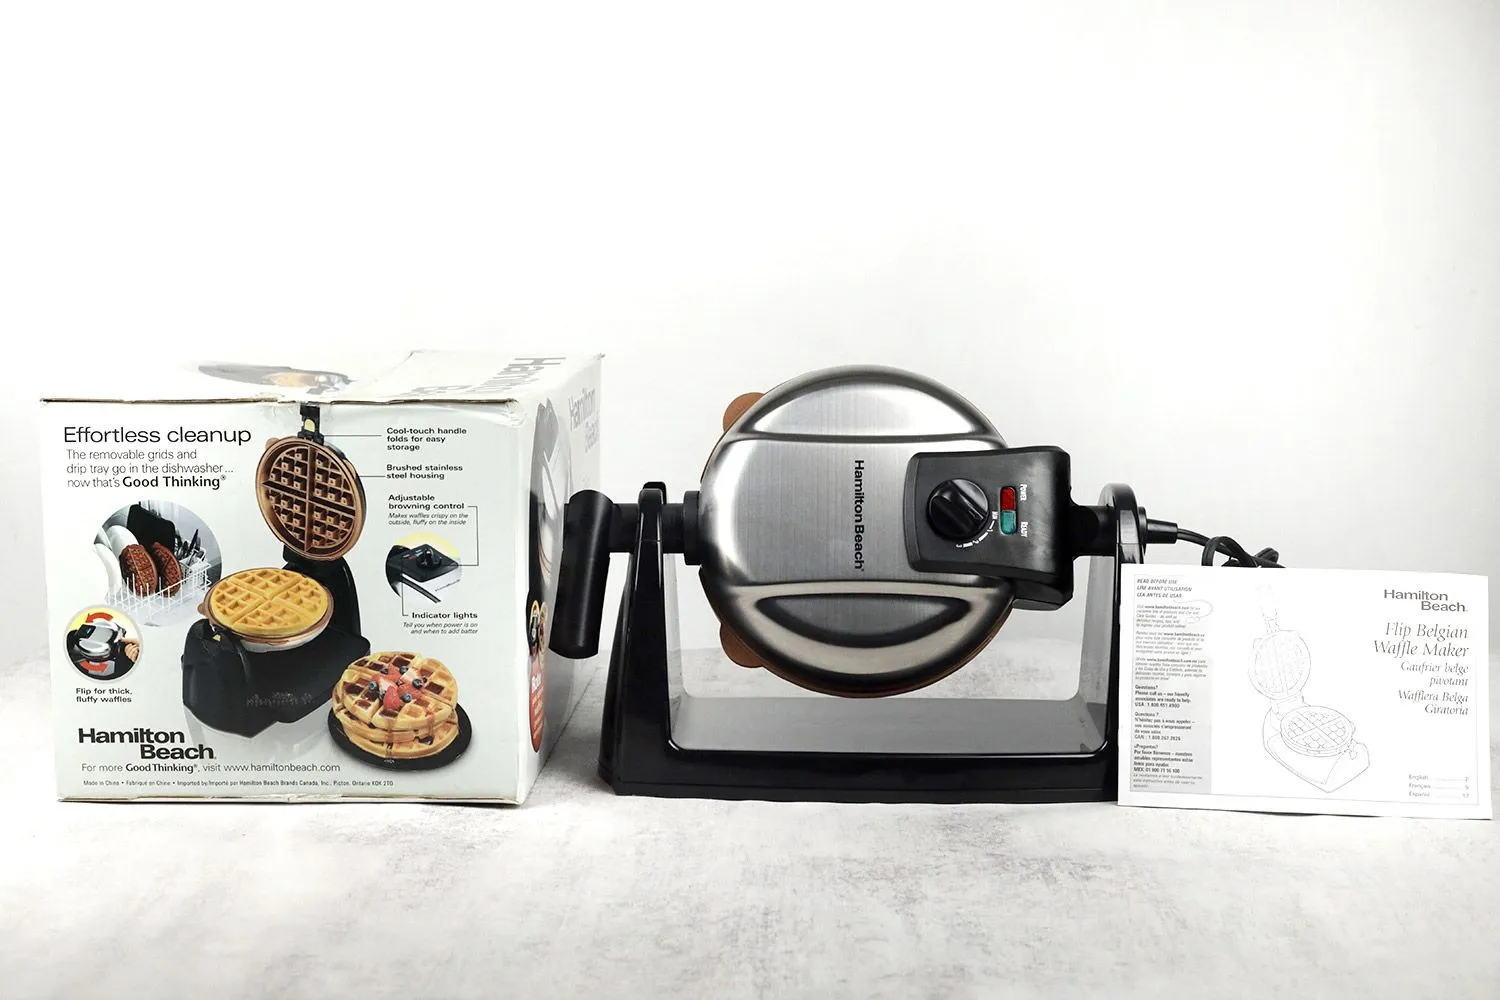 HomeCraft™ 7-Inch Round Belgian Waffle Maker — Nostalgia Products